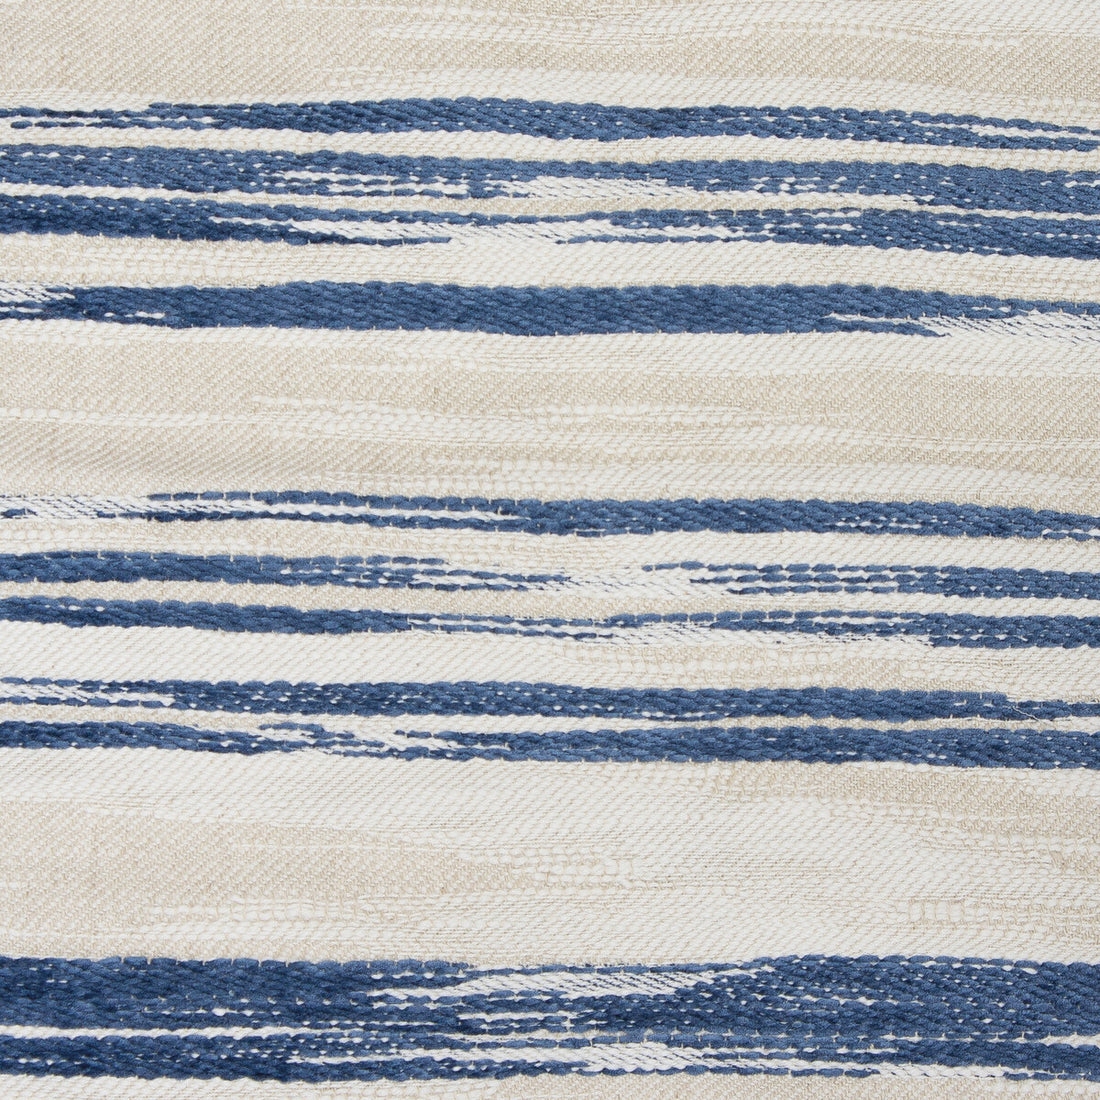 Moctezuma fabric in azul color - pattern GDT5593.002.0 - by Gaston y Daniela in the Gaston Nuevo Mundo collection